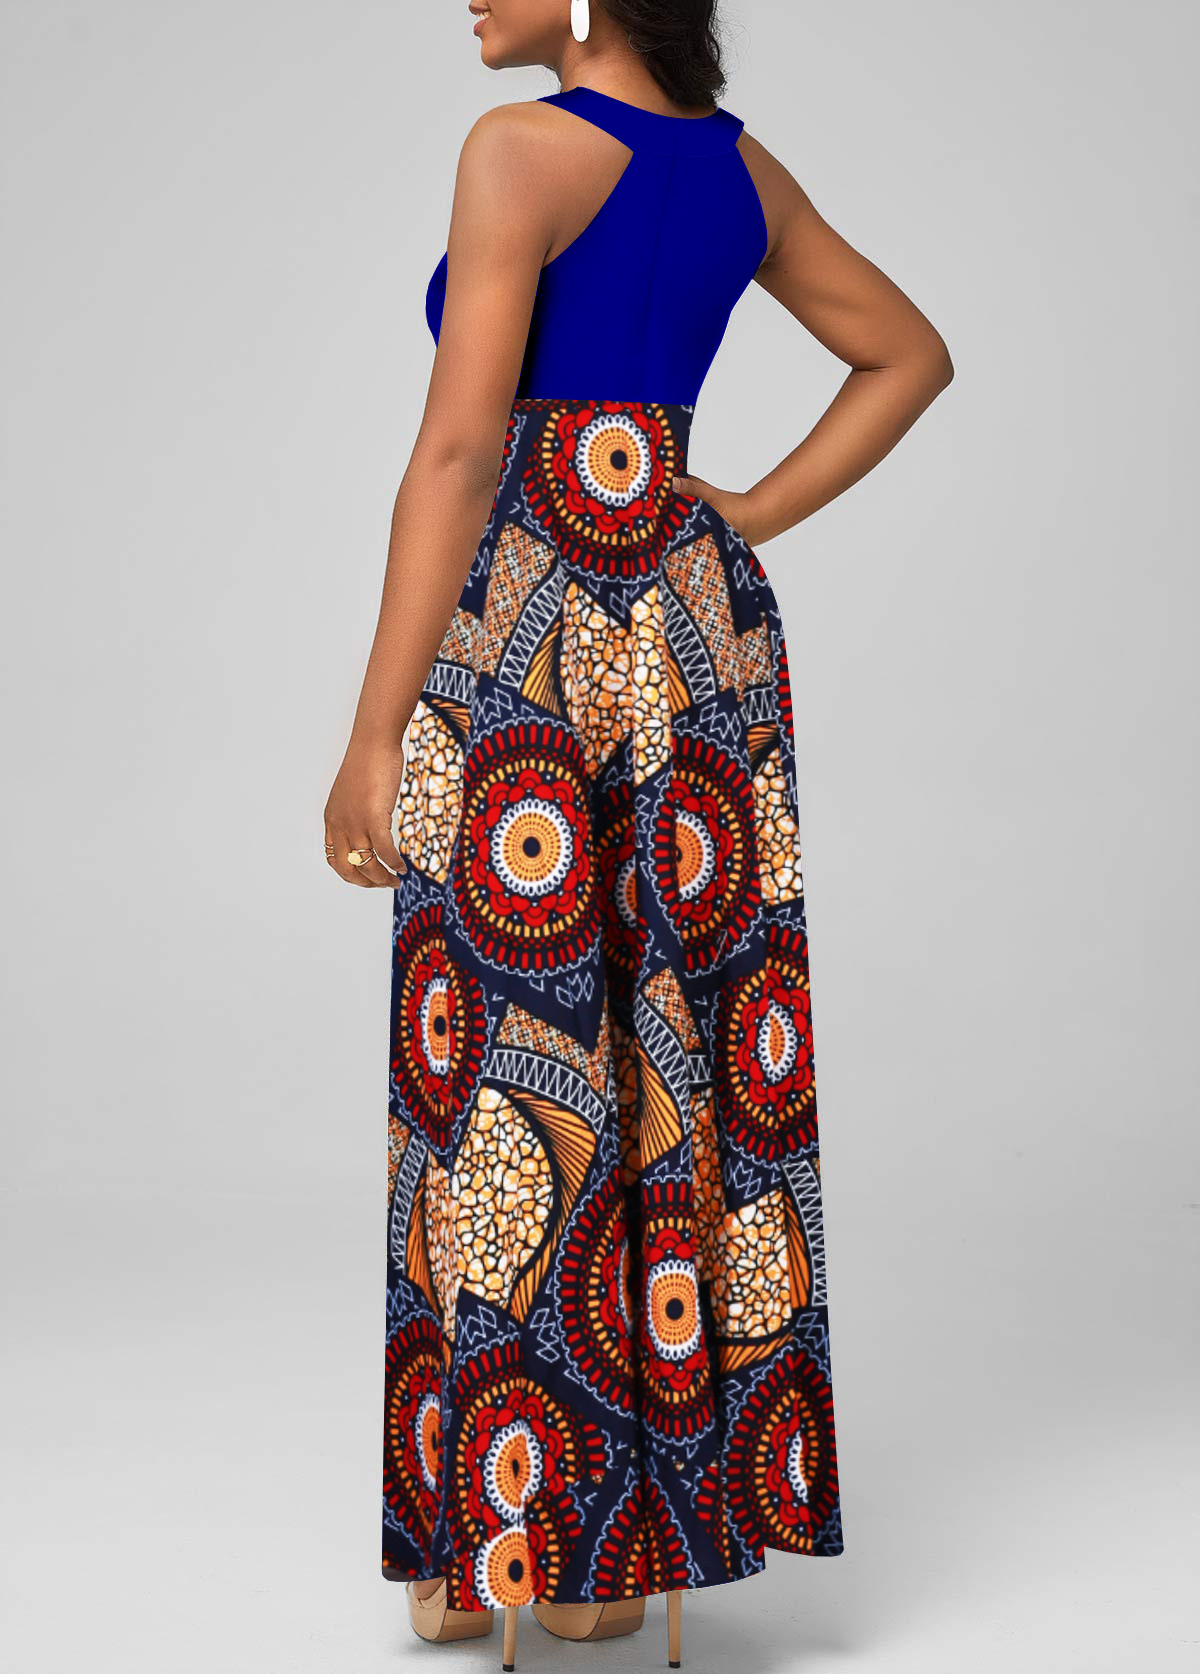 African Tribal Print Cage Neck Navy Sleeveless Maxi Dress